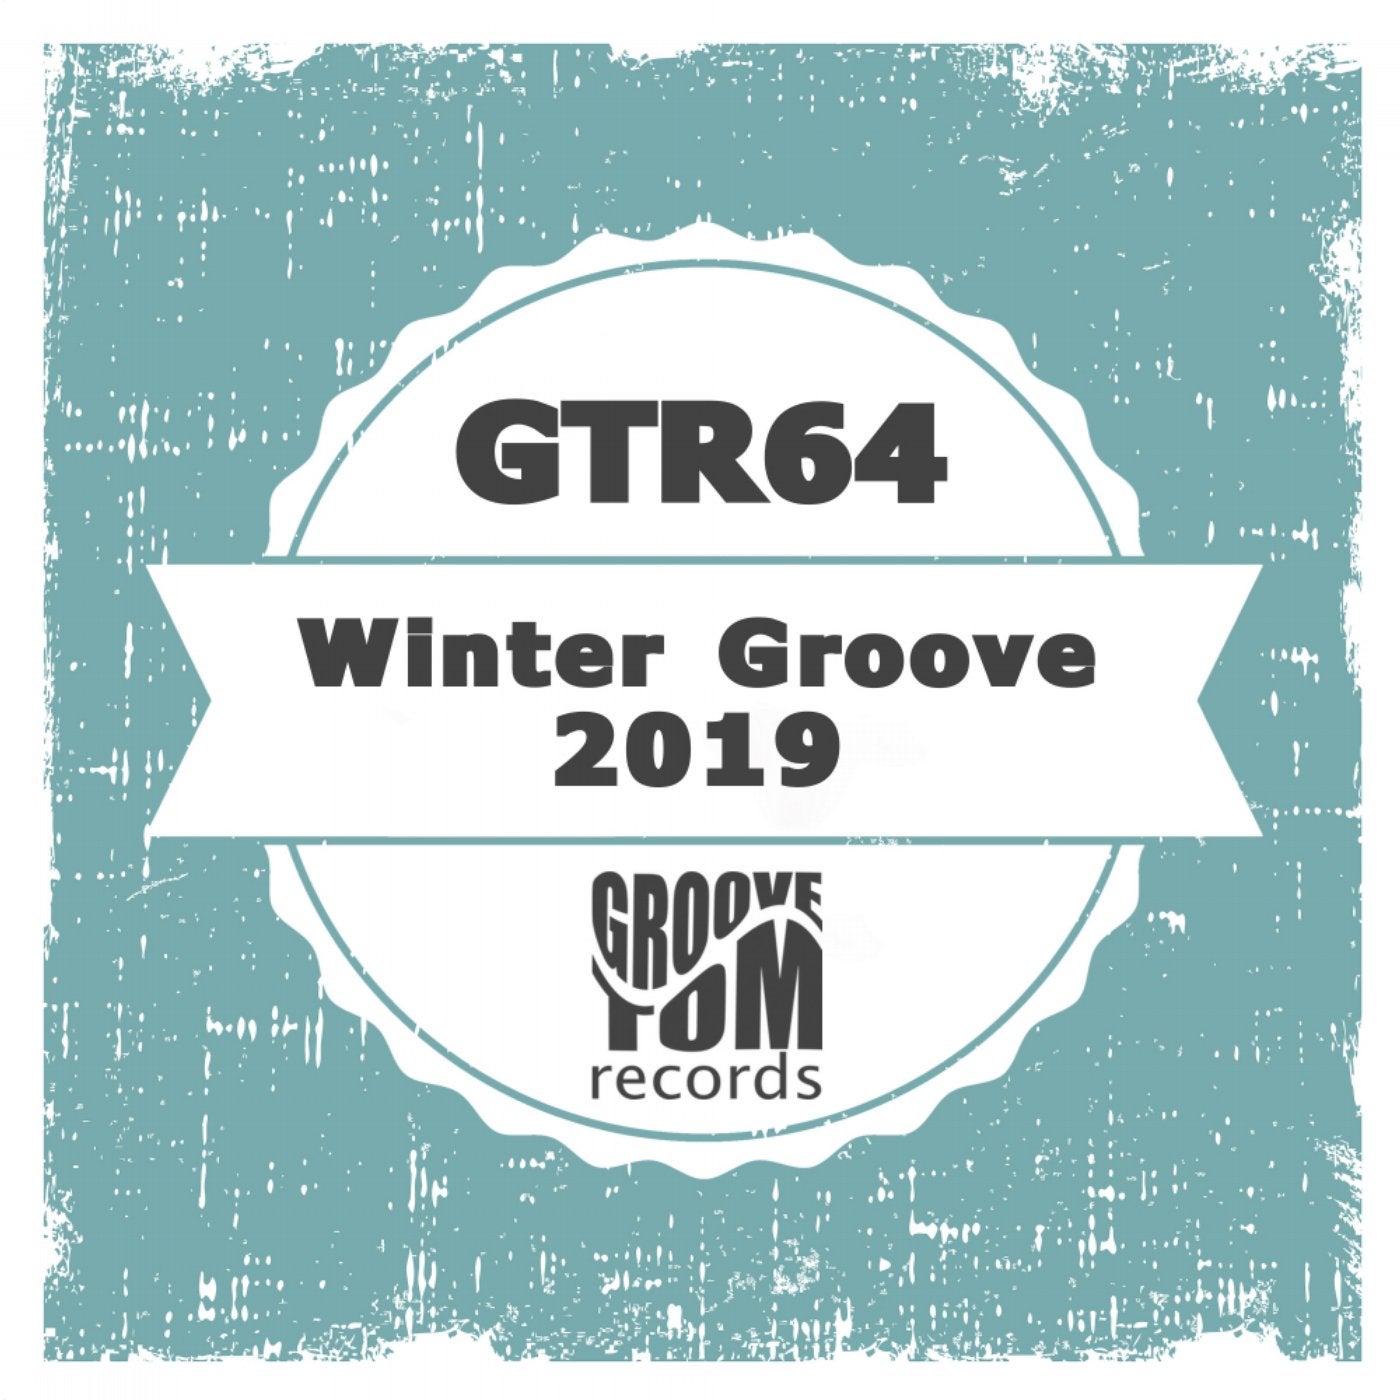 Winter Groove 2019